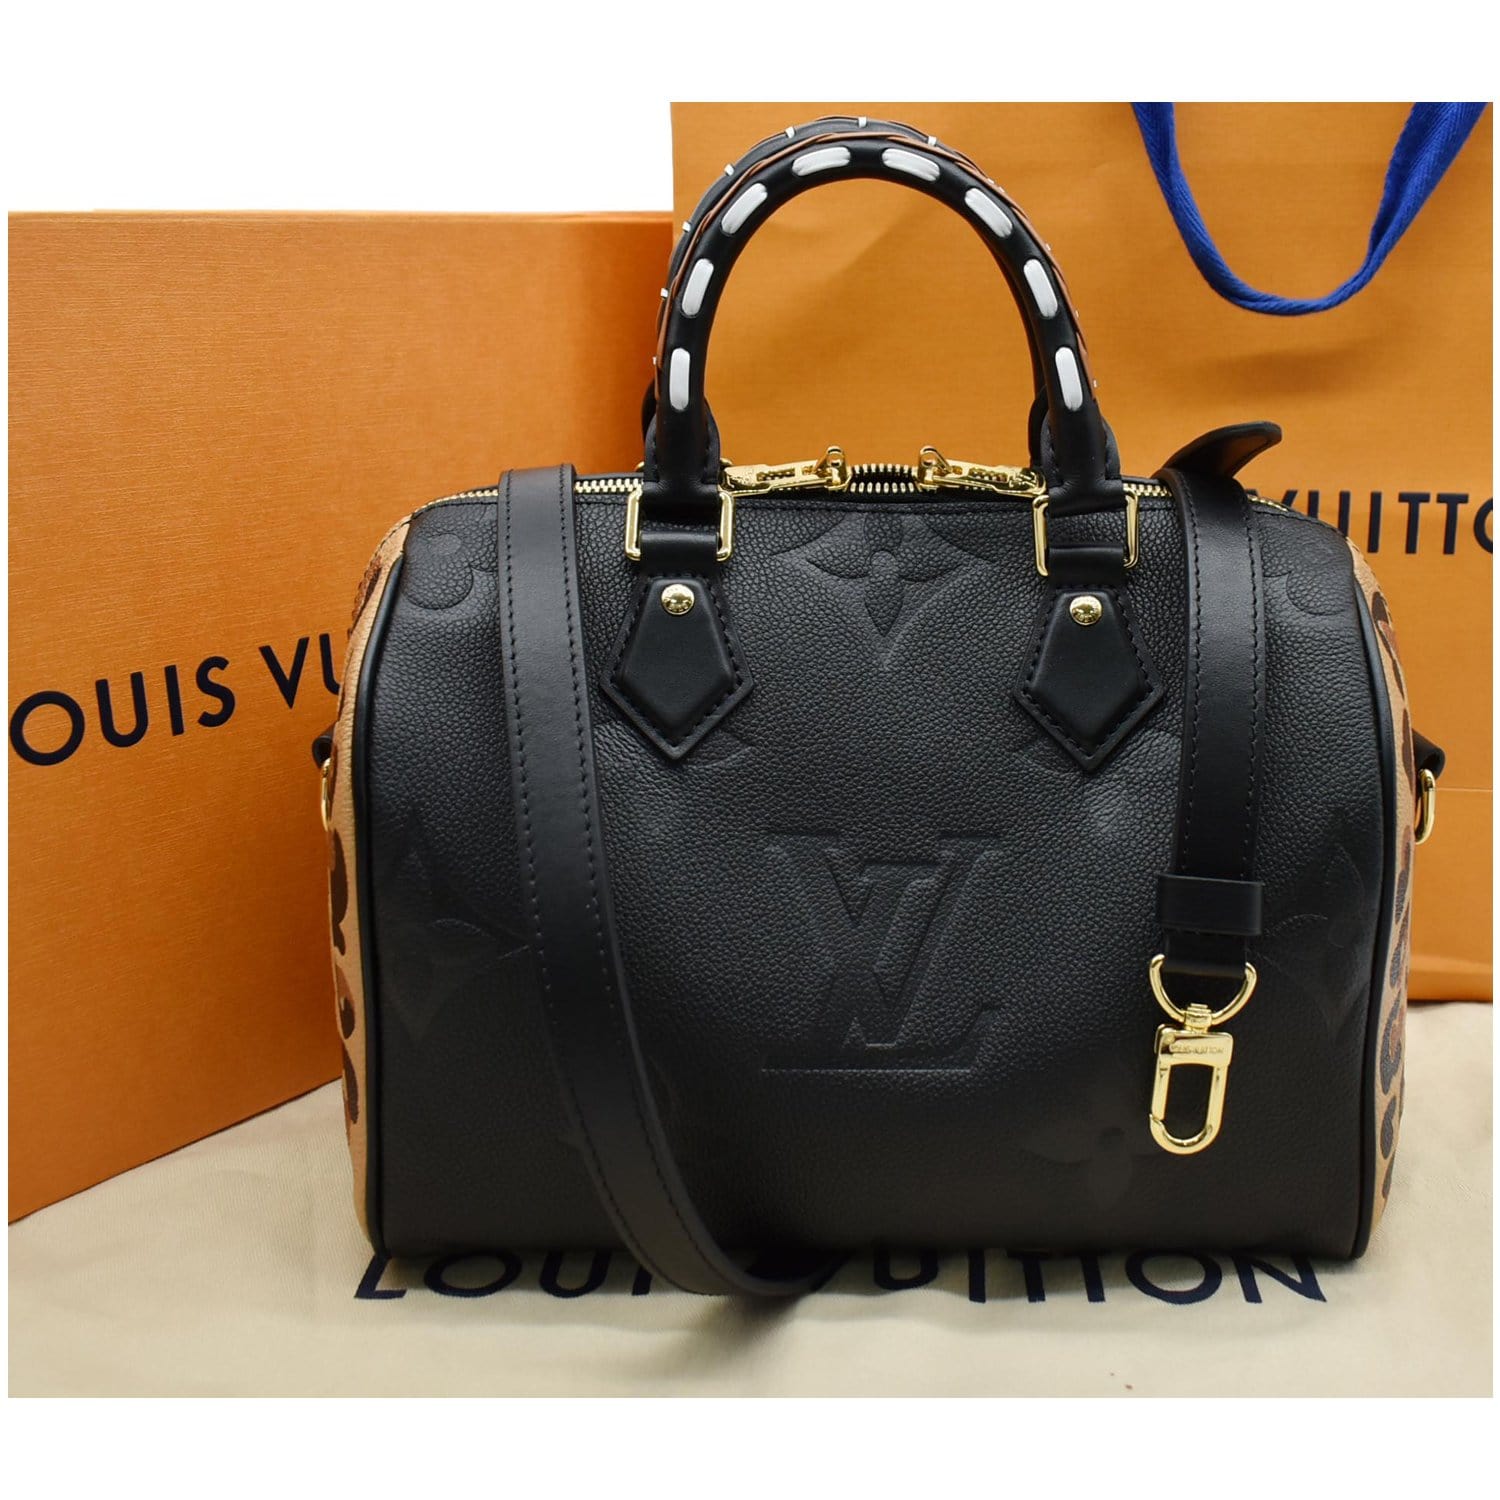 Louis Vuitton Limited Edition Wild At Heart Black Speedy 25